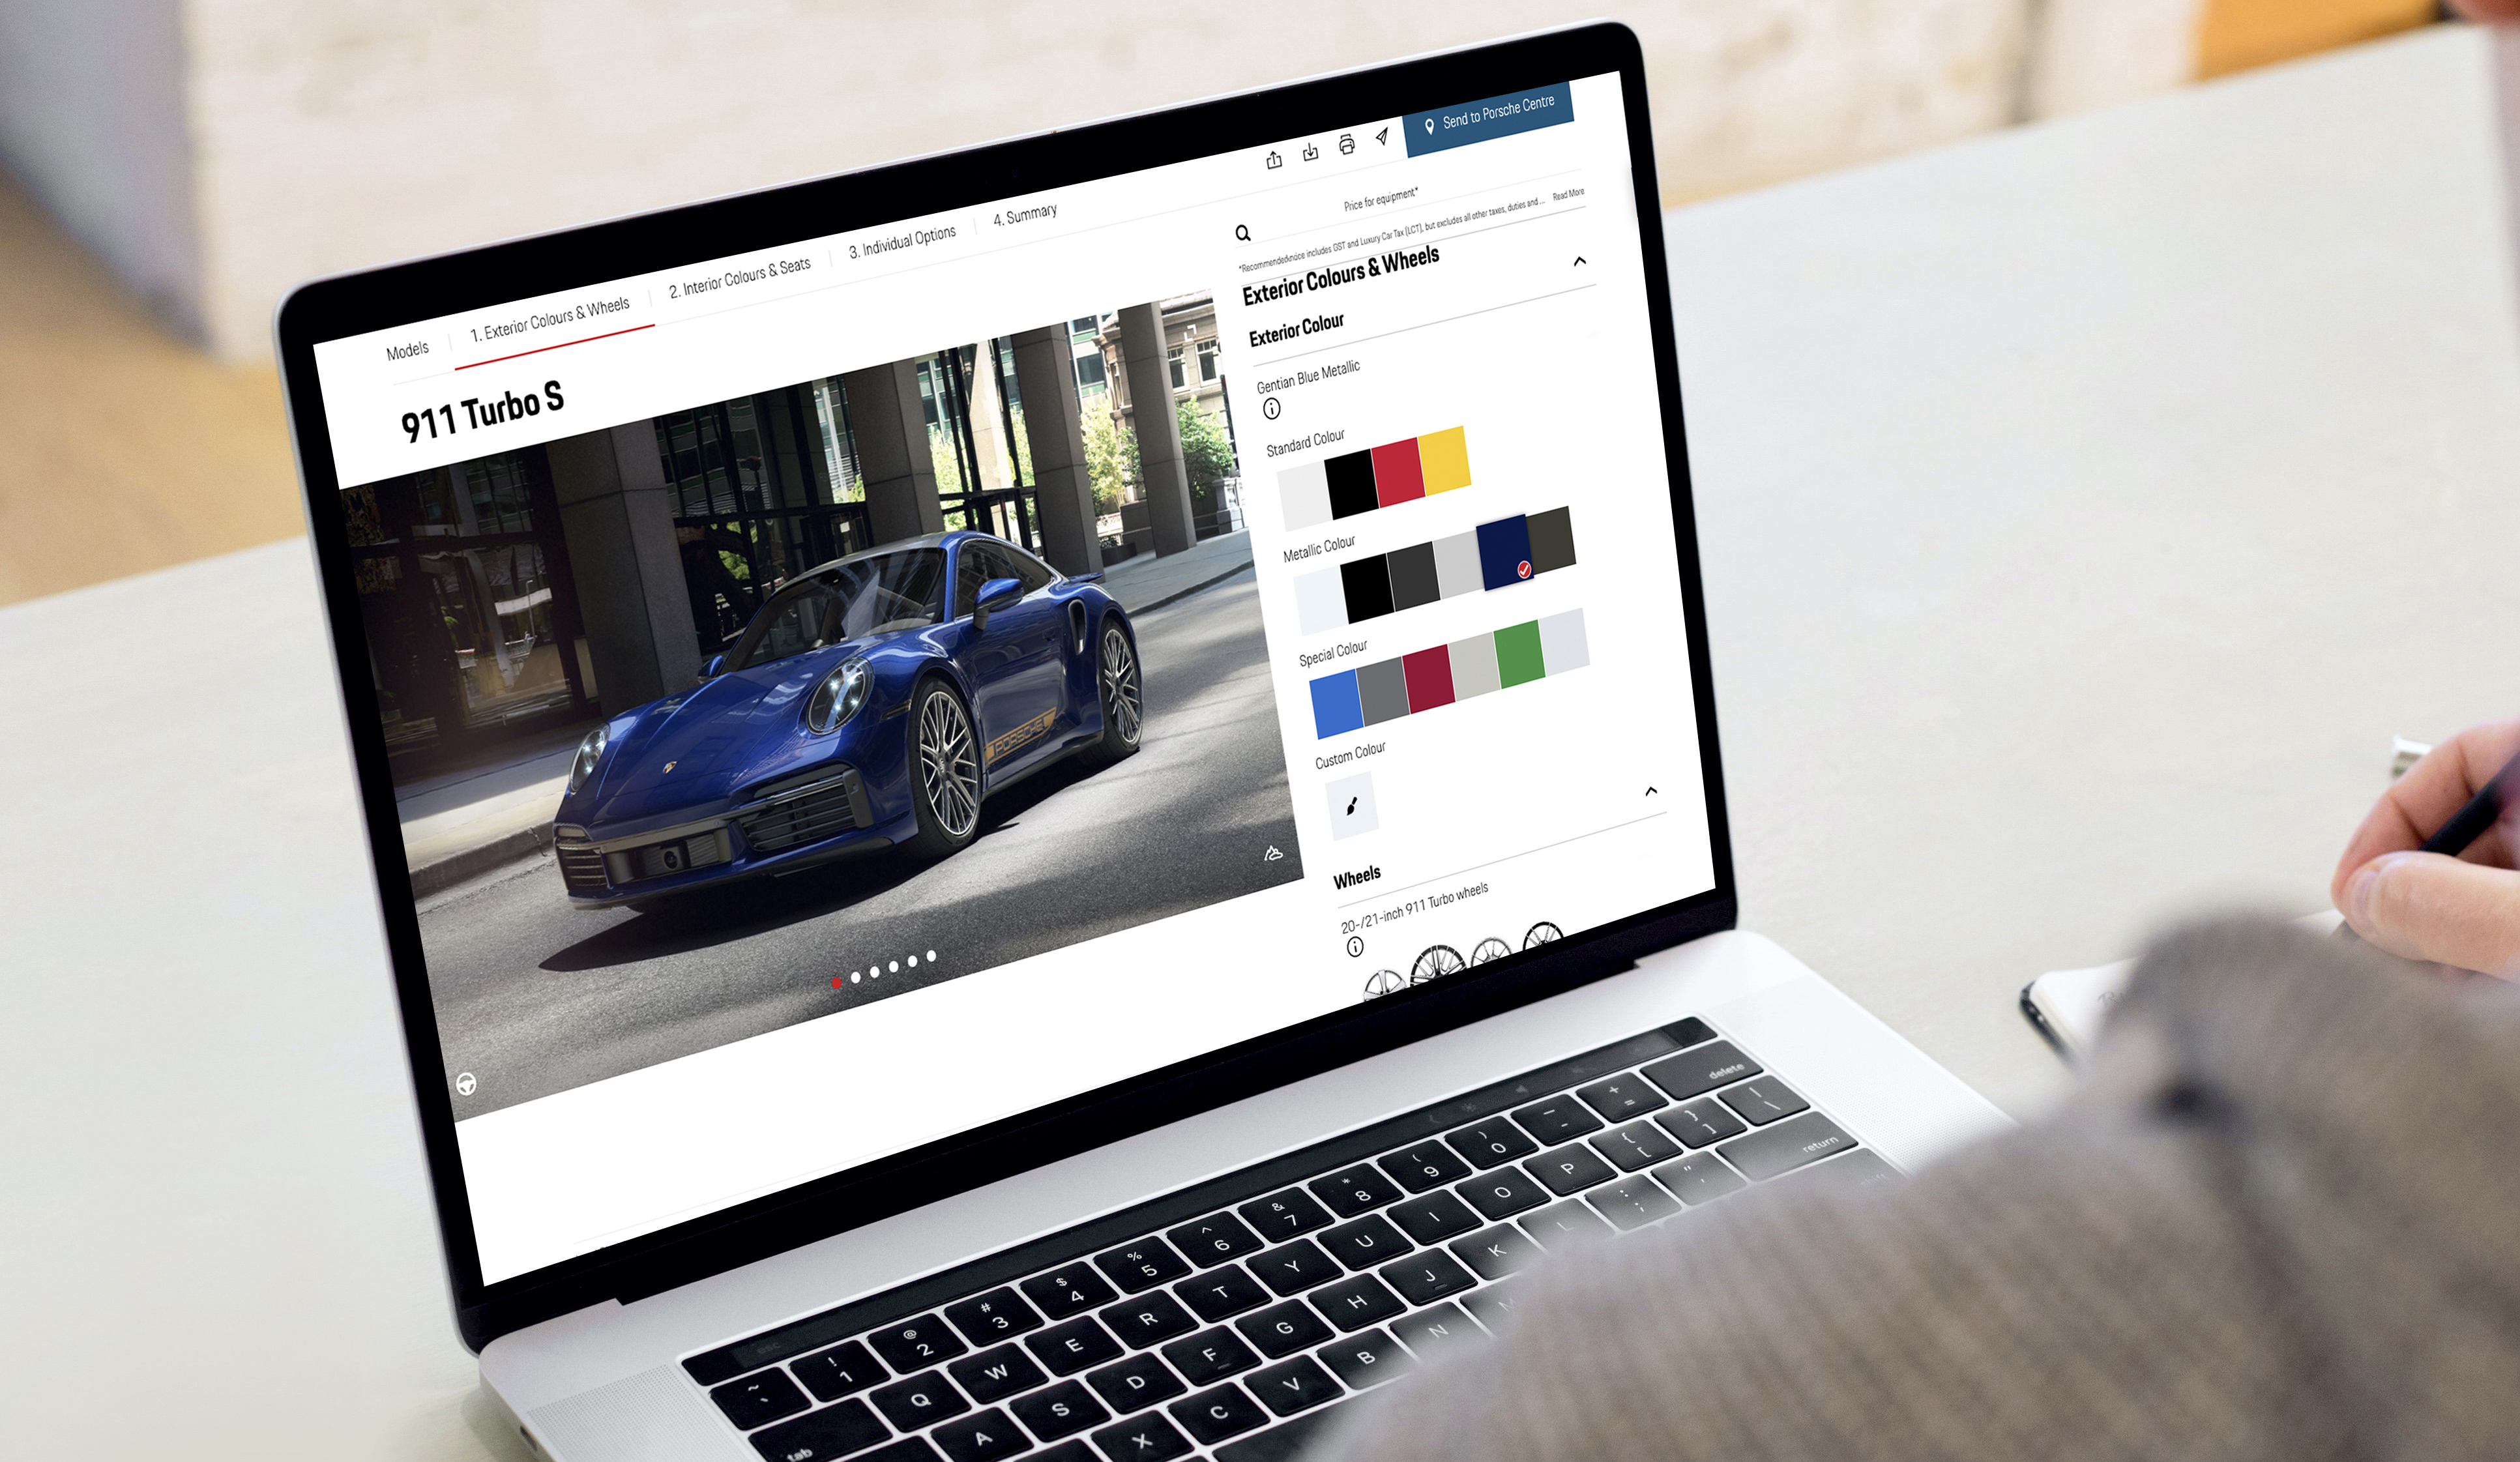 Laptop screen showing colour options for a Porsche 911 Turbo S